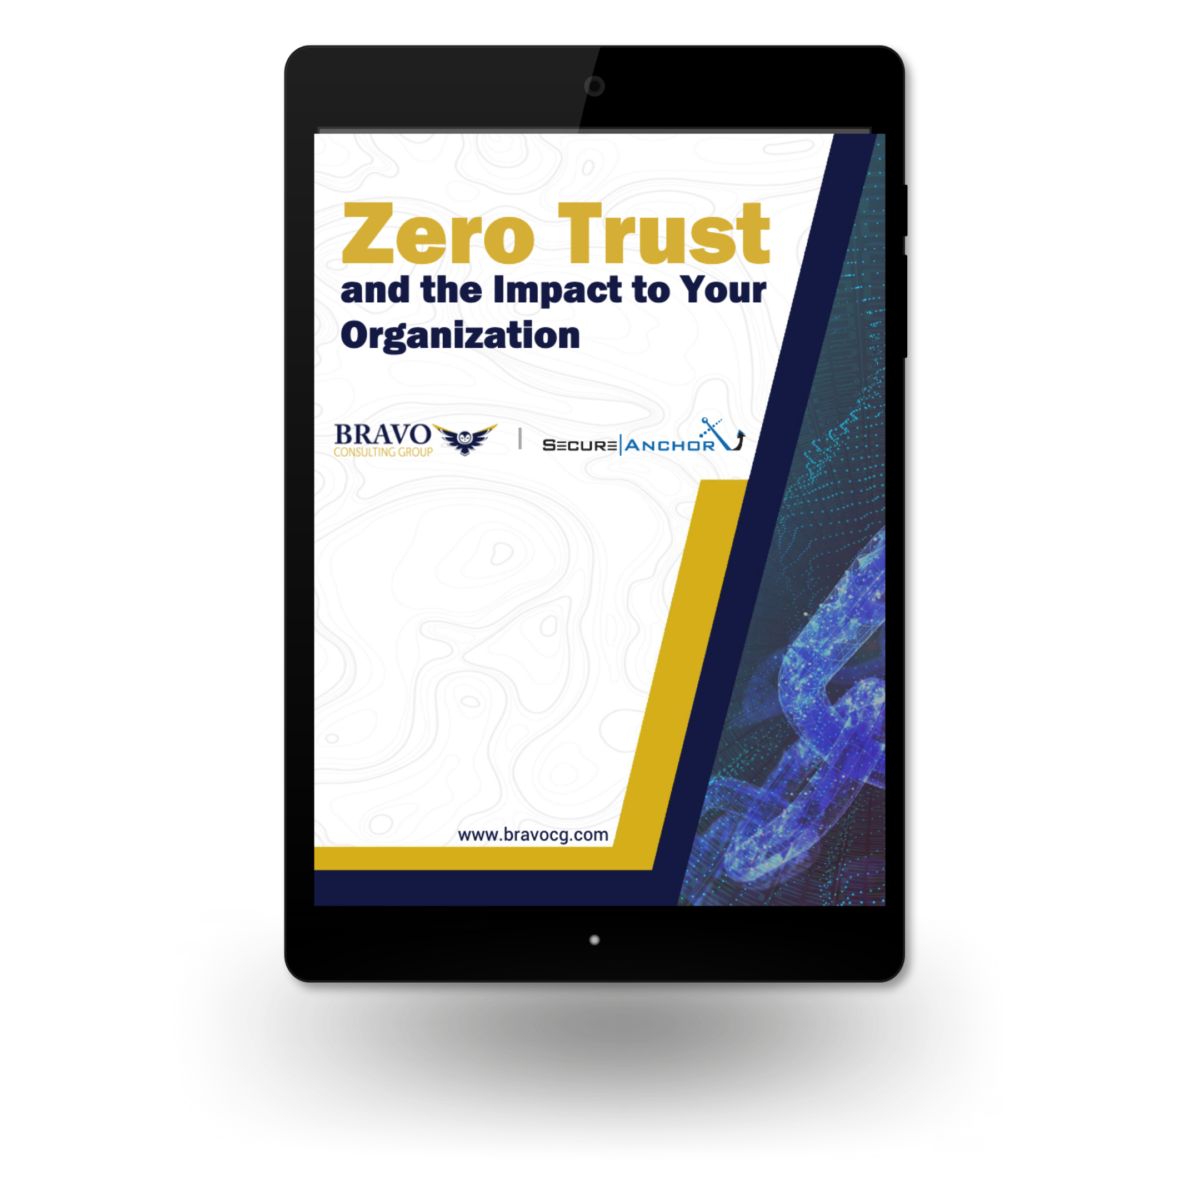 Zero trust ebook on tablet